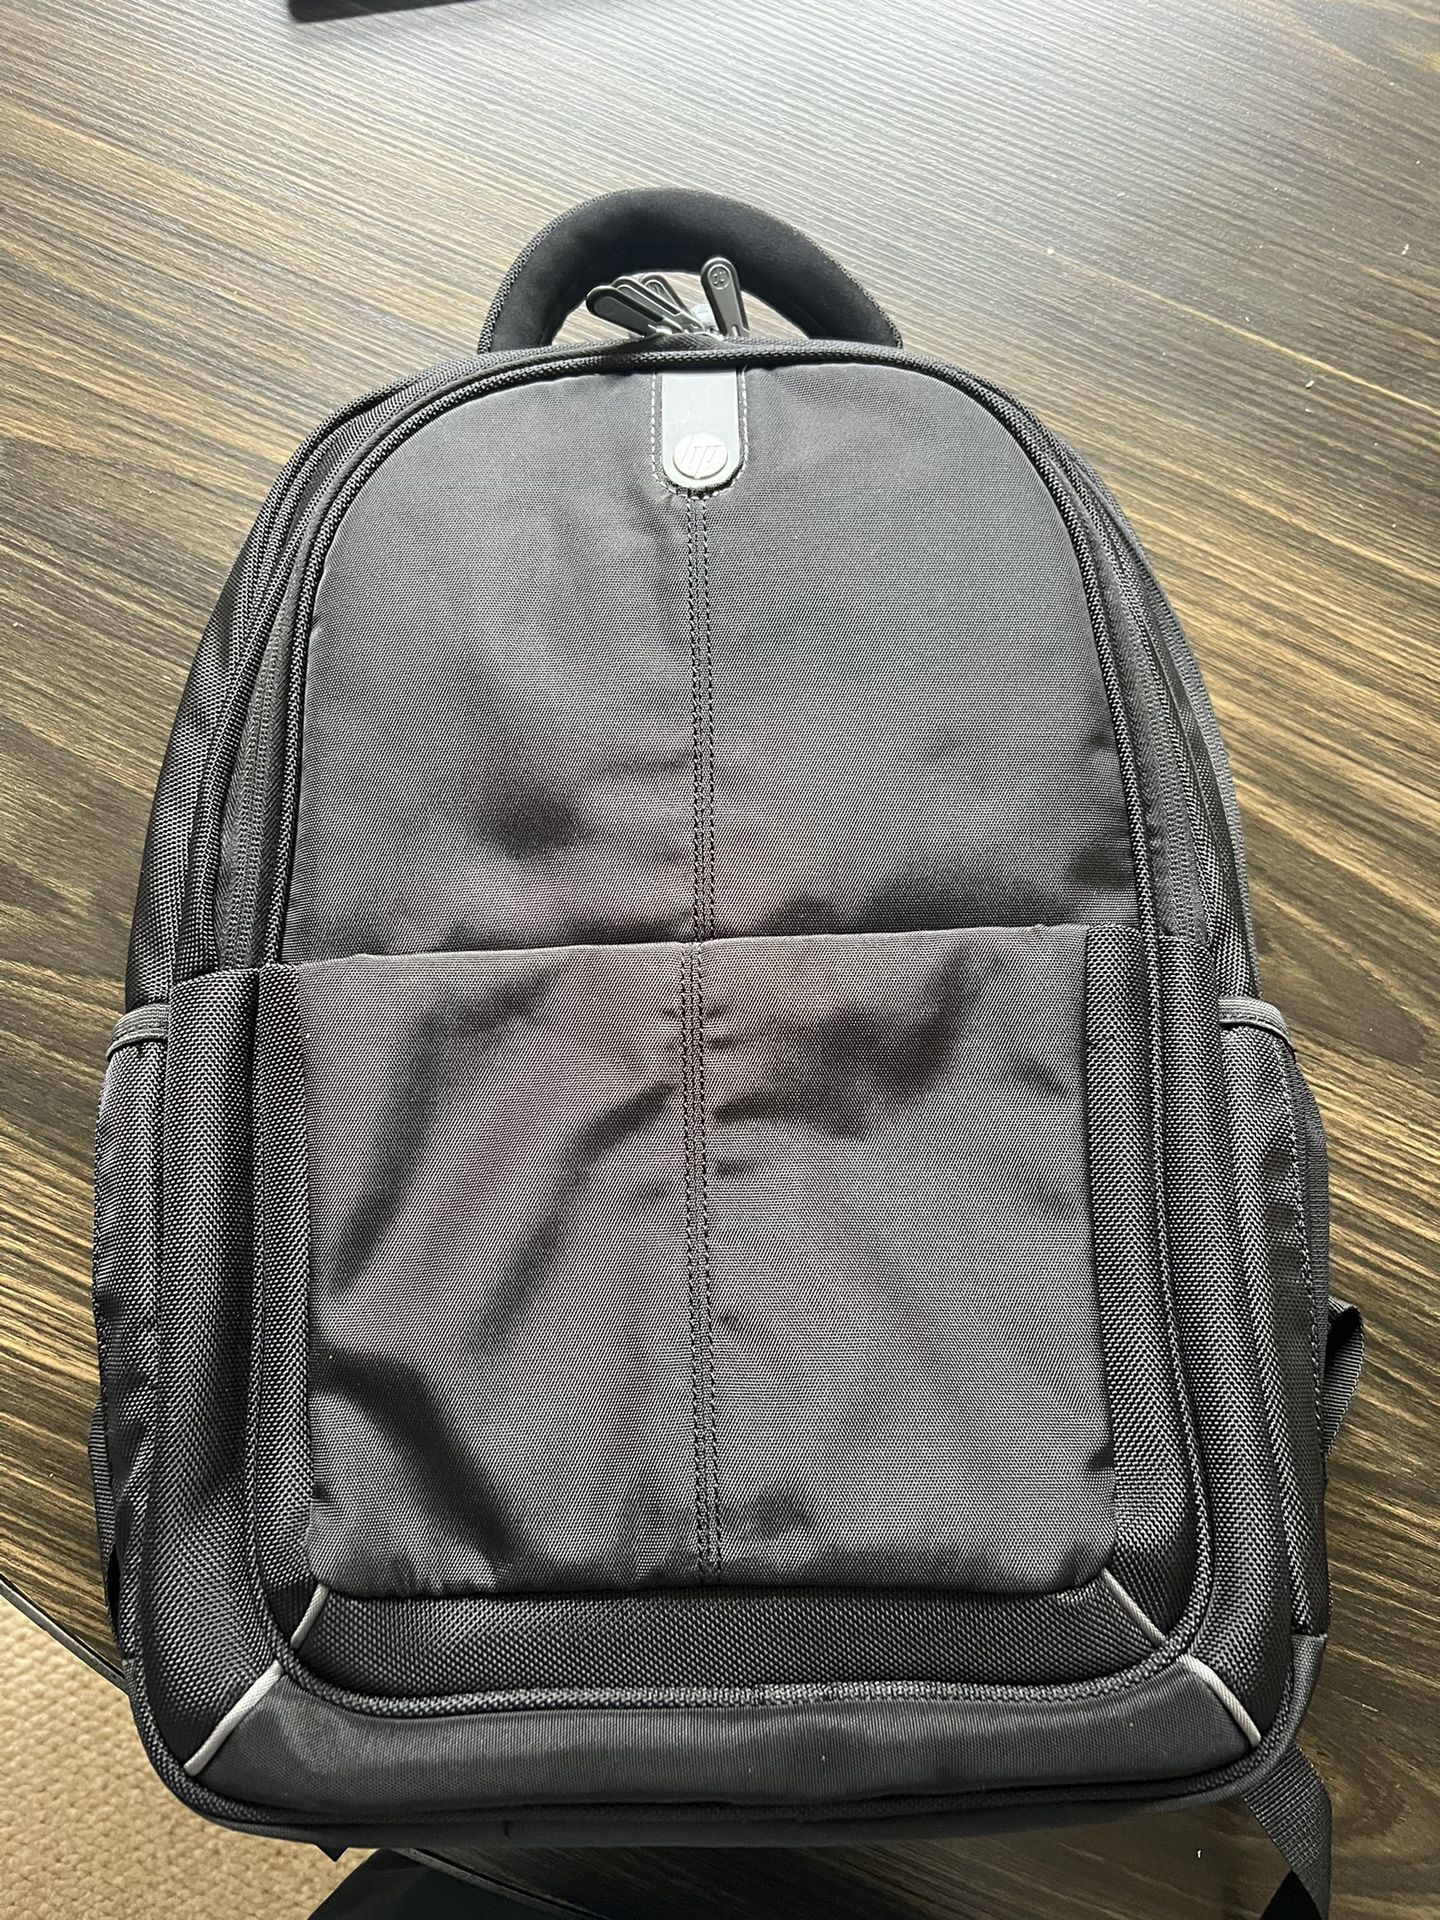 HP Laptop Bag Brand New 